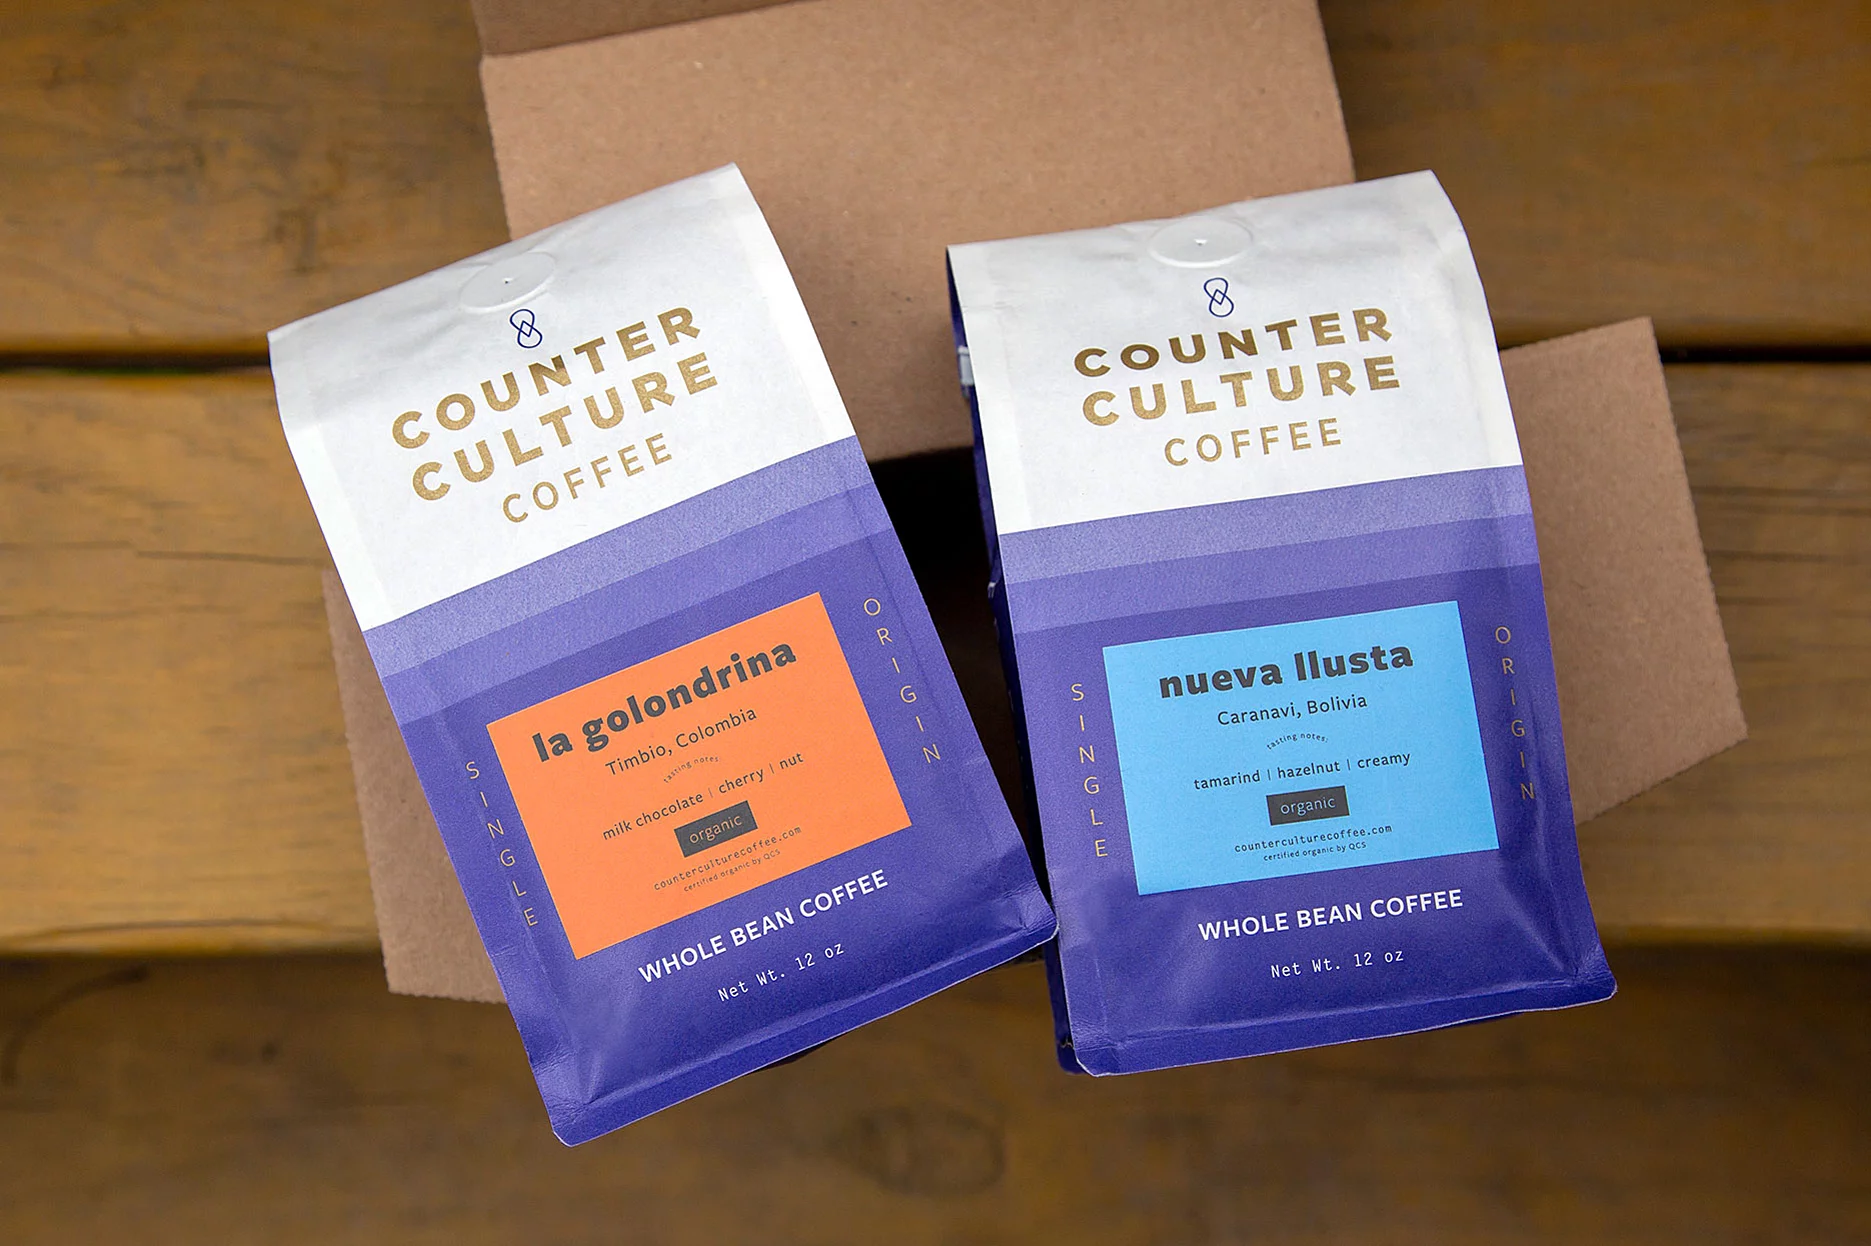 Counter Culture coffee